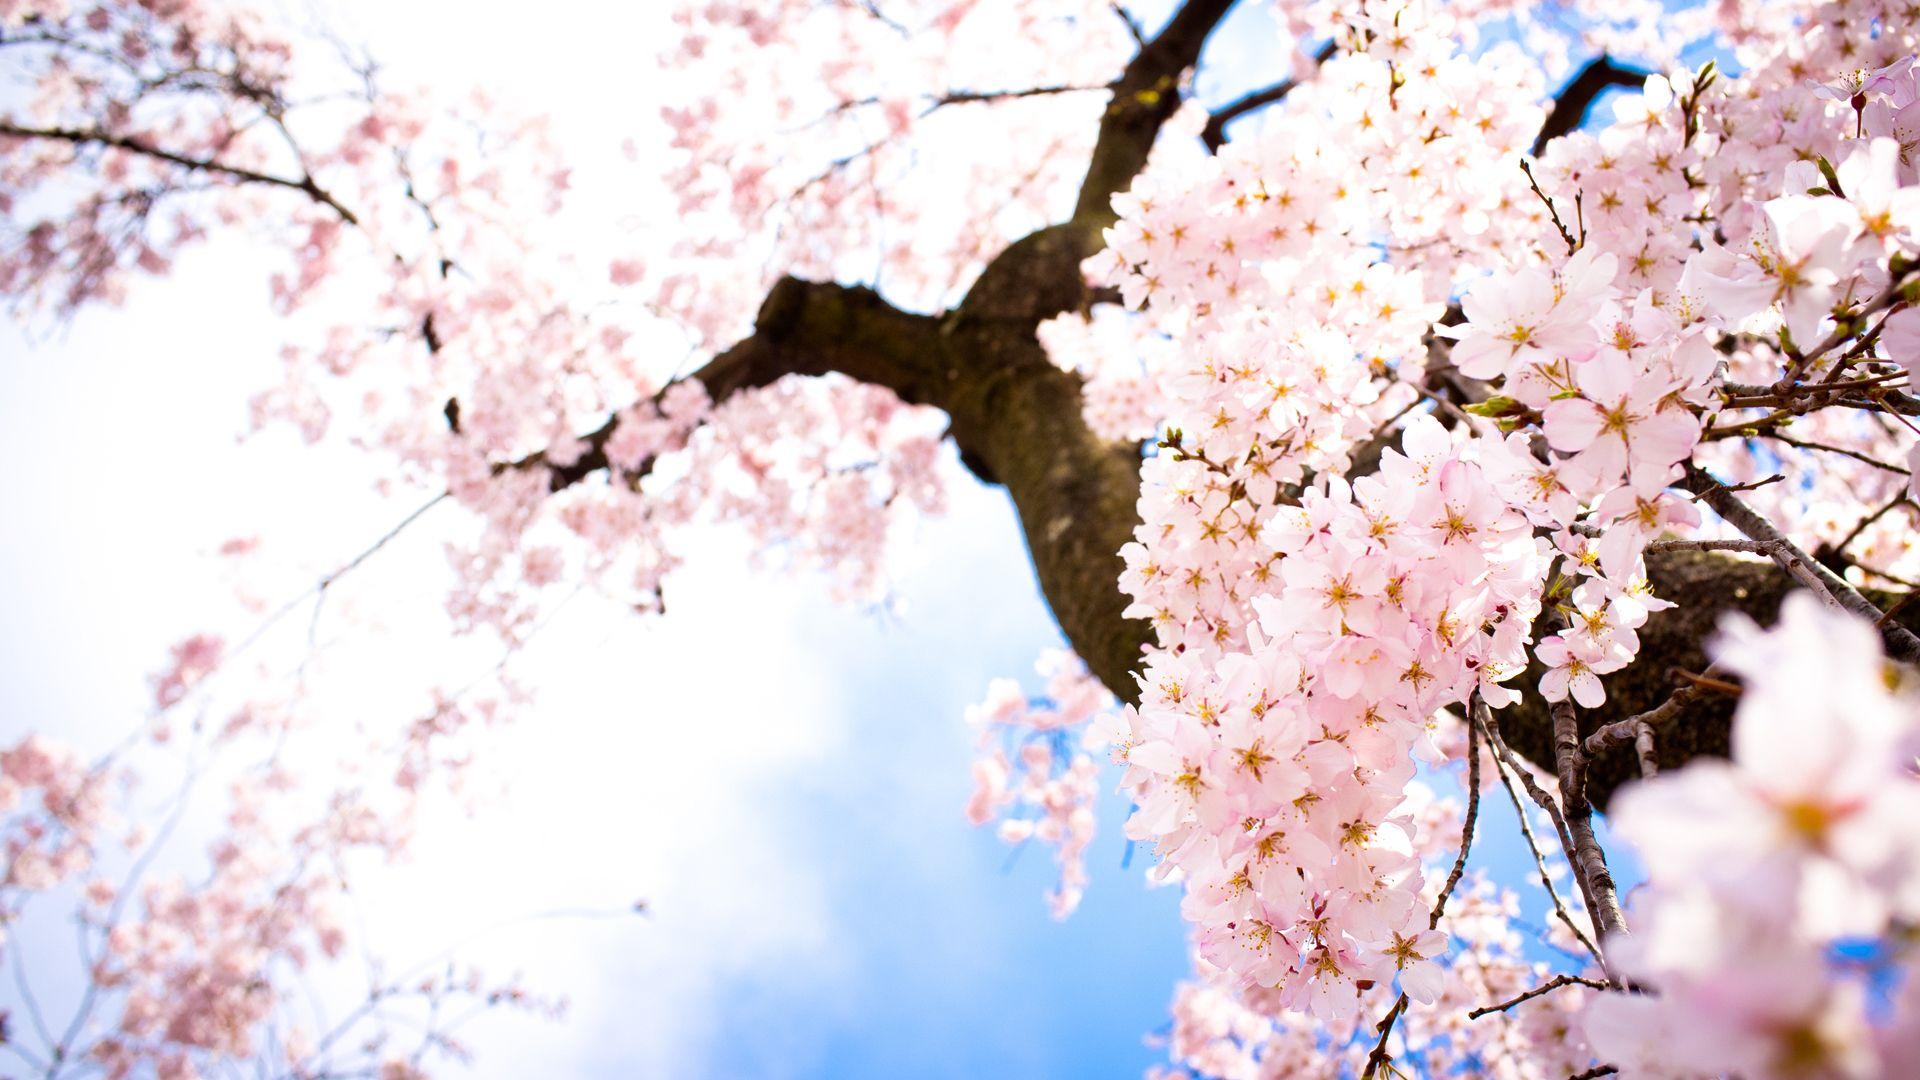 Astounding HD cherry blossom sakura widescreen wallpaper. You can